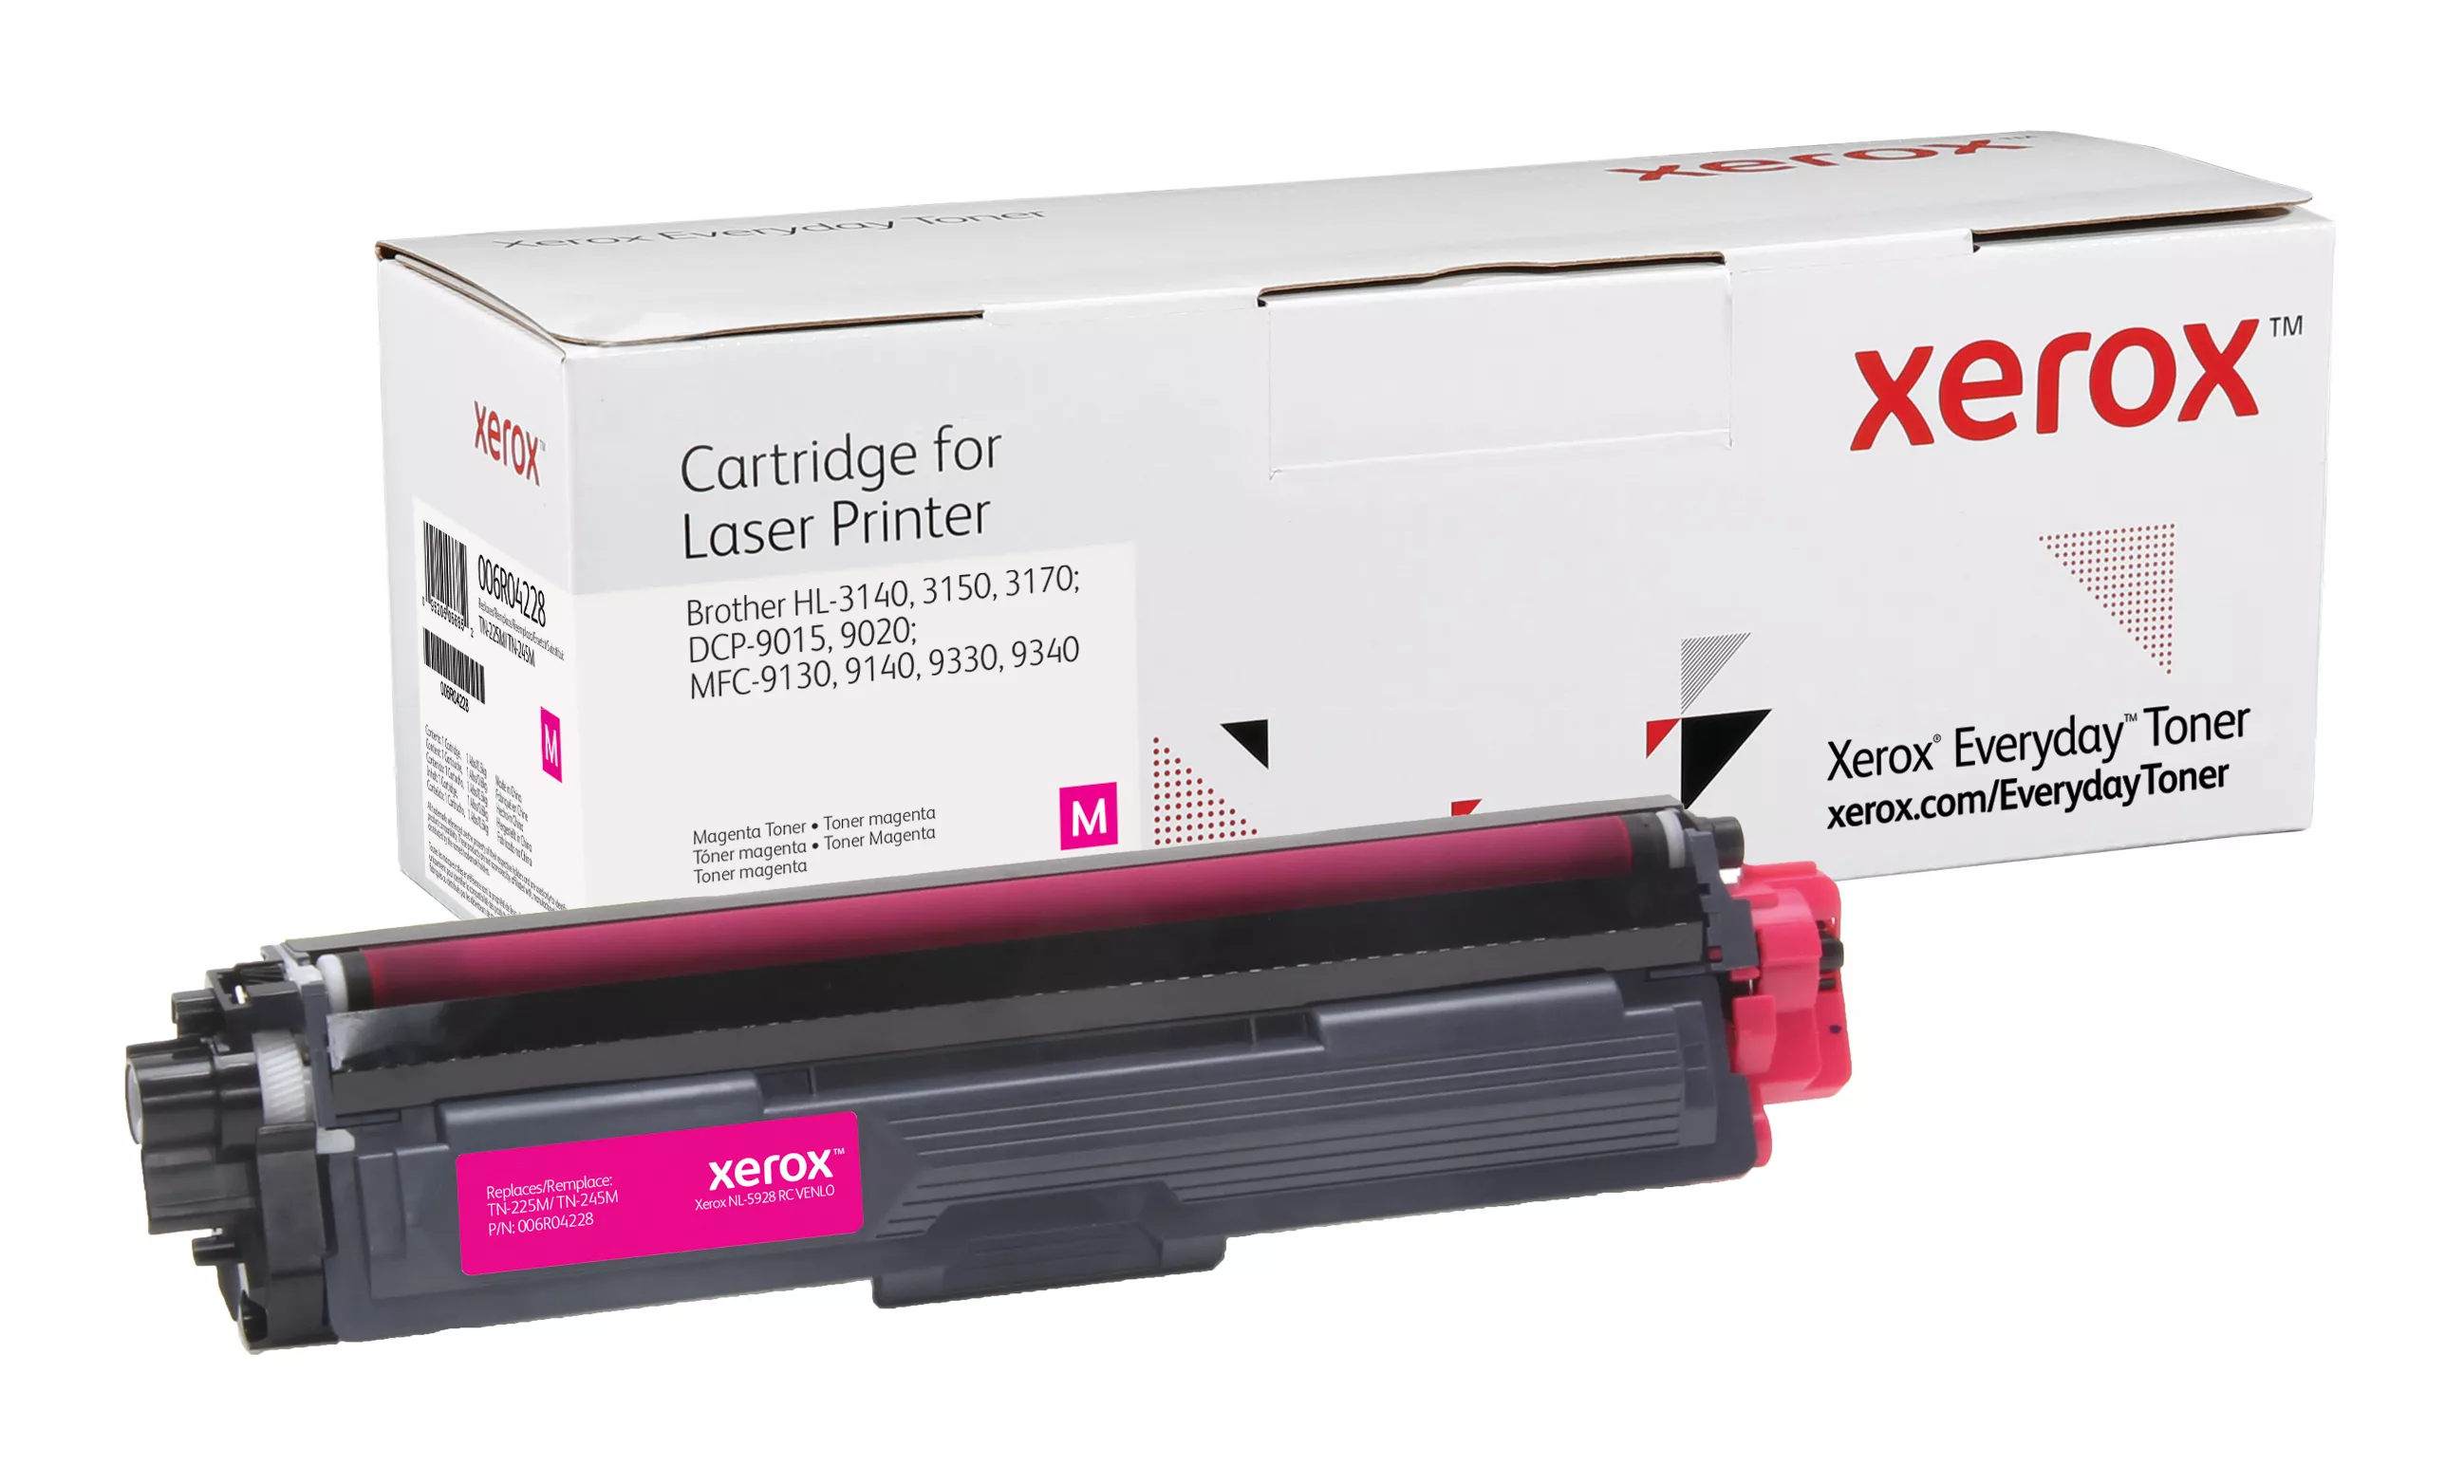 Achat Toner Magenta Everyday™ de Xerox compatible avec Brother au meilleur prix